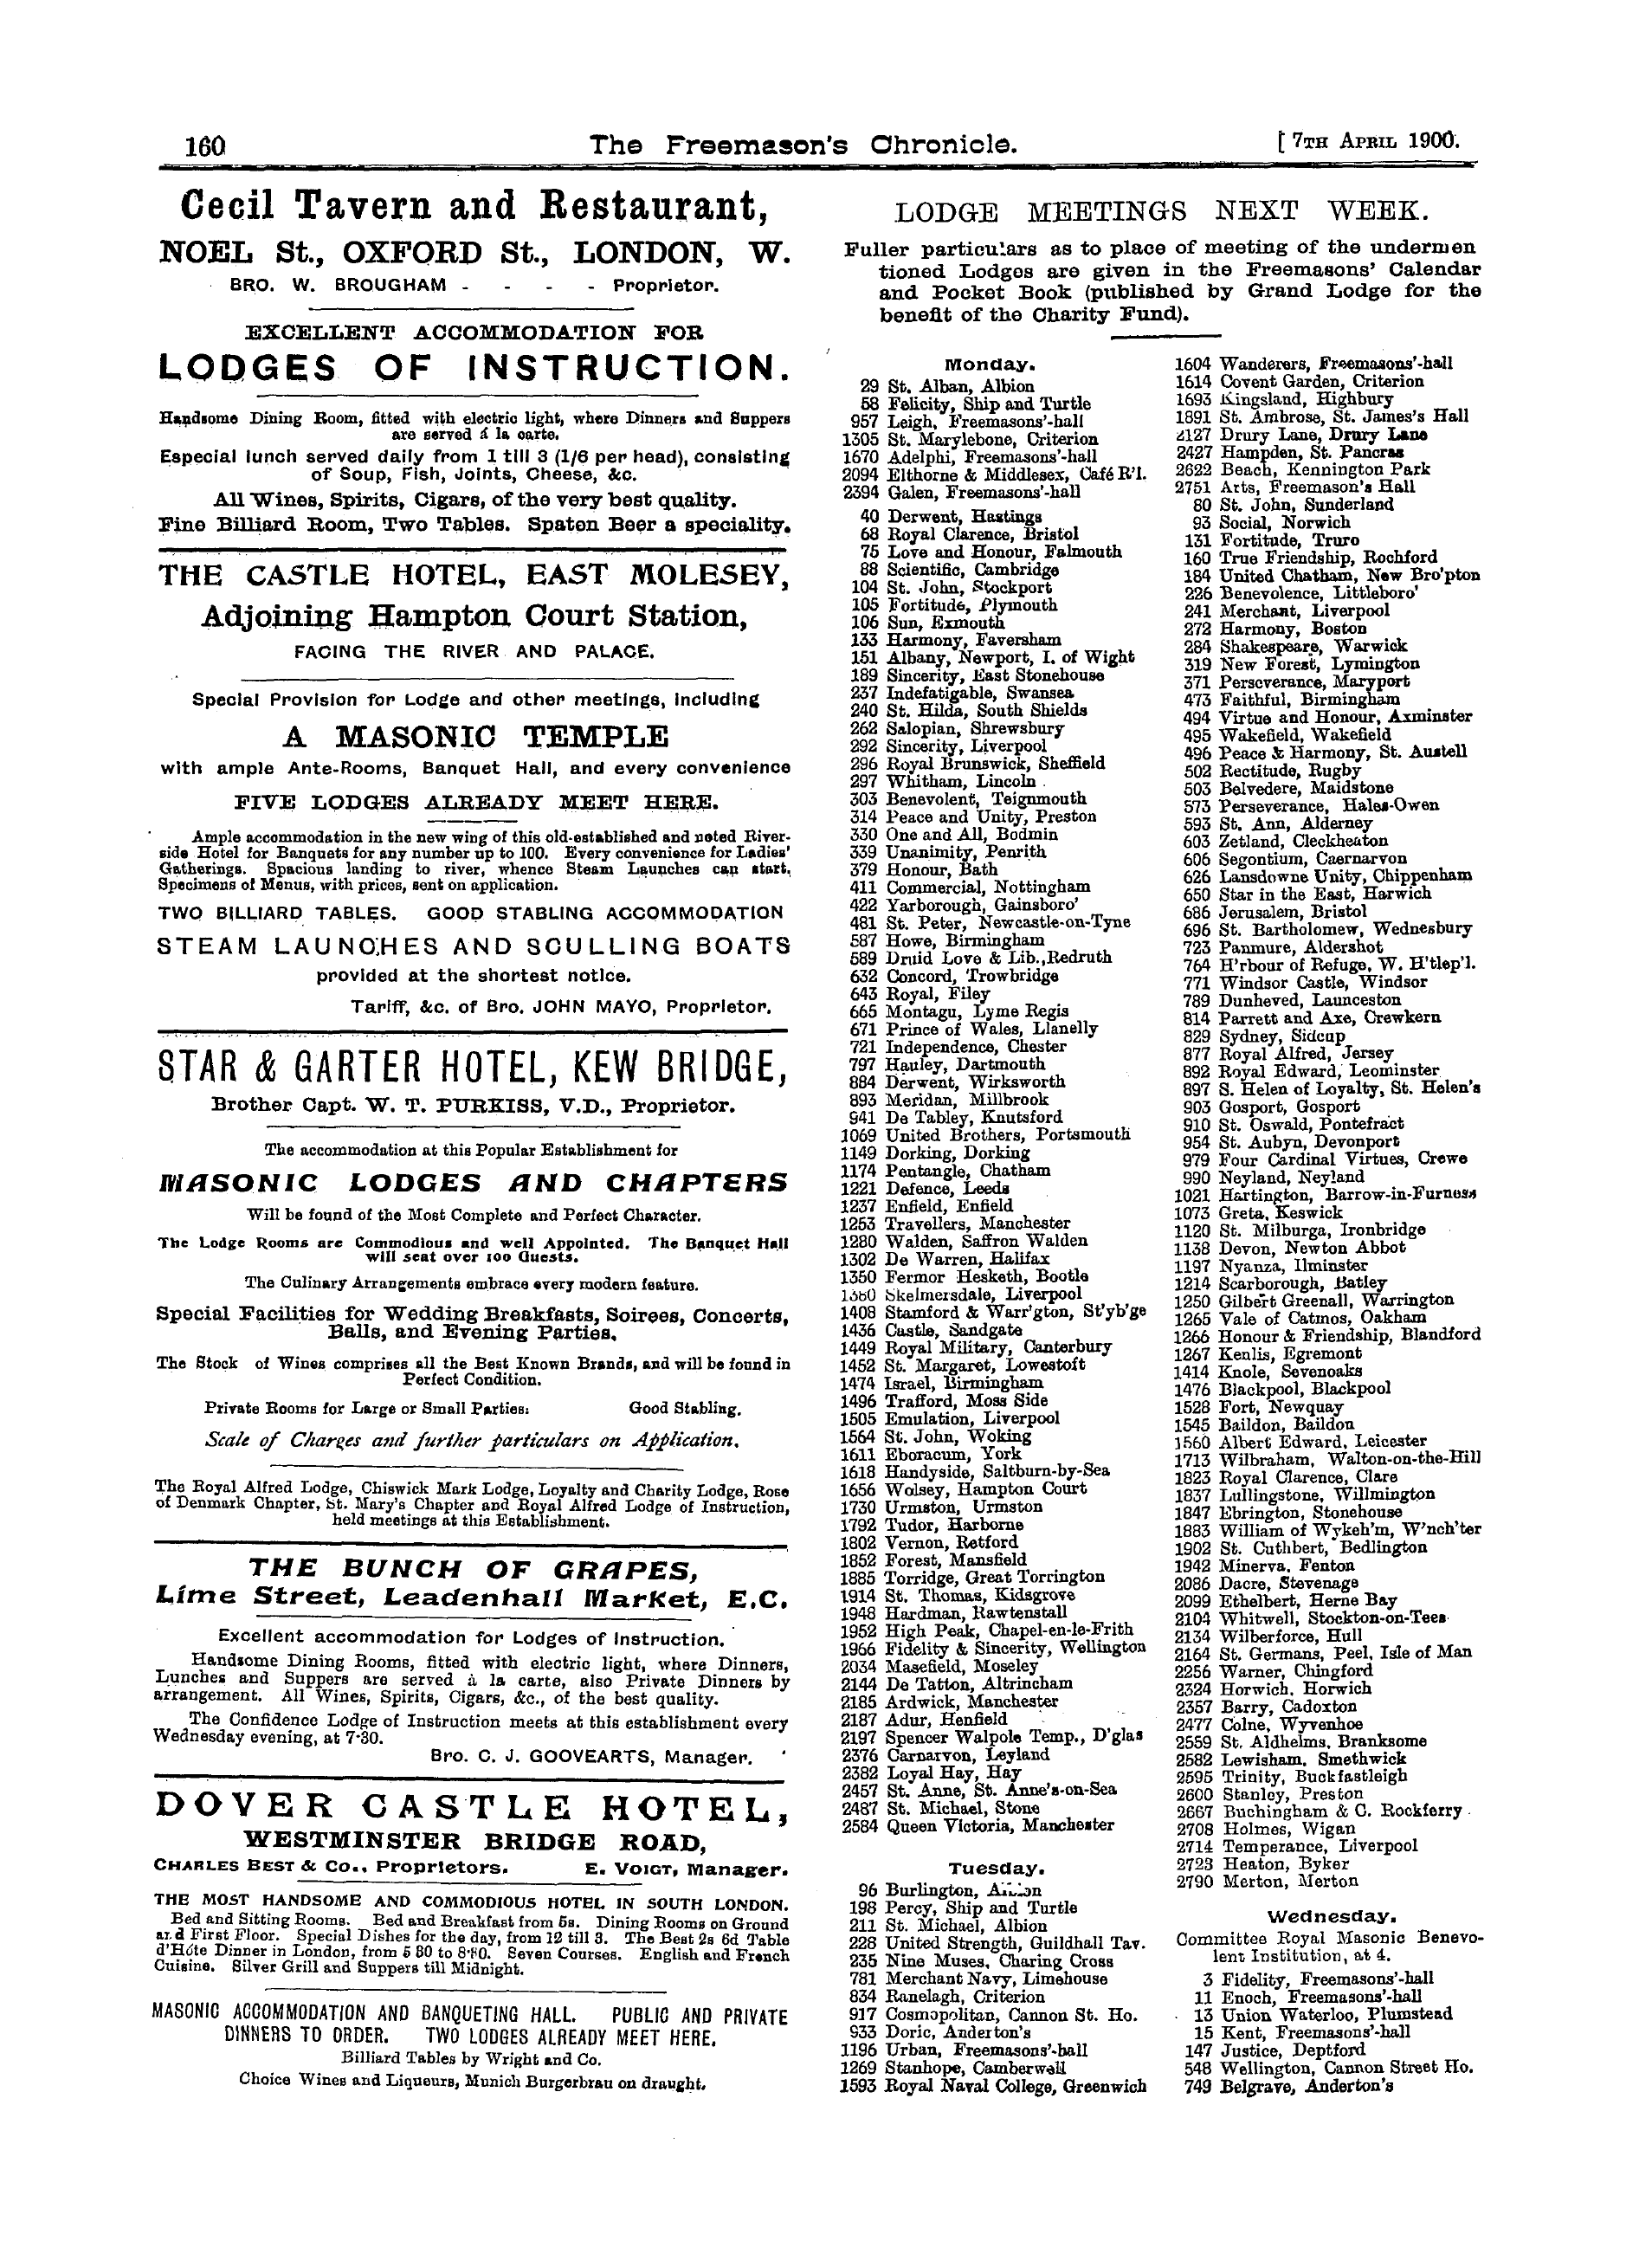 The Freemason's Chronicle: 1900-04-07 - Ad00404